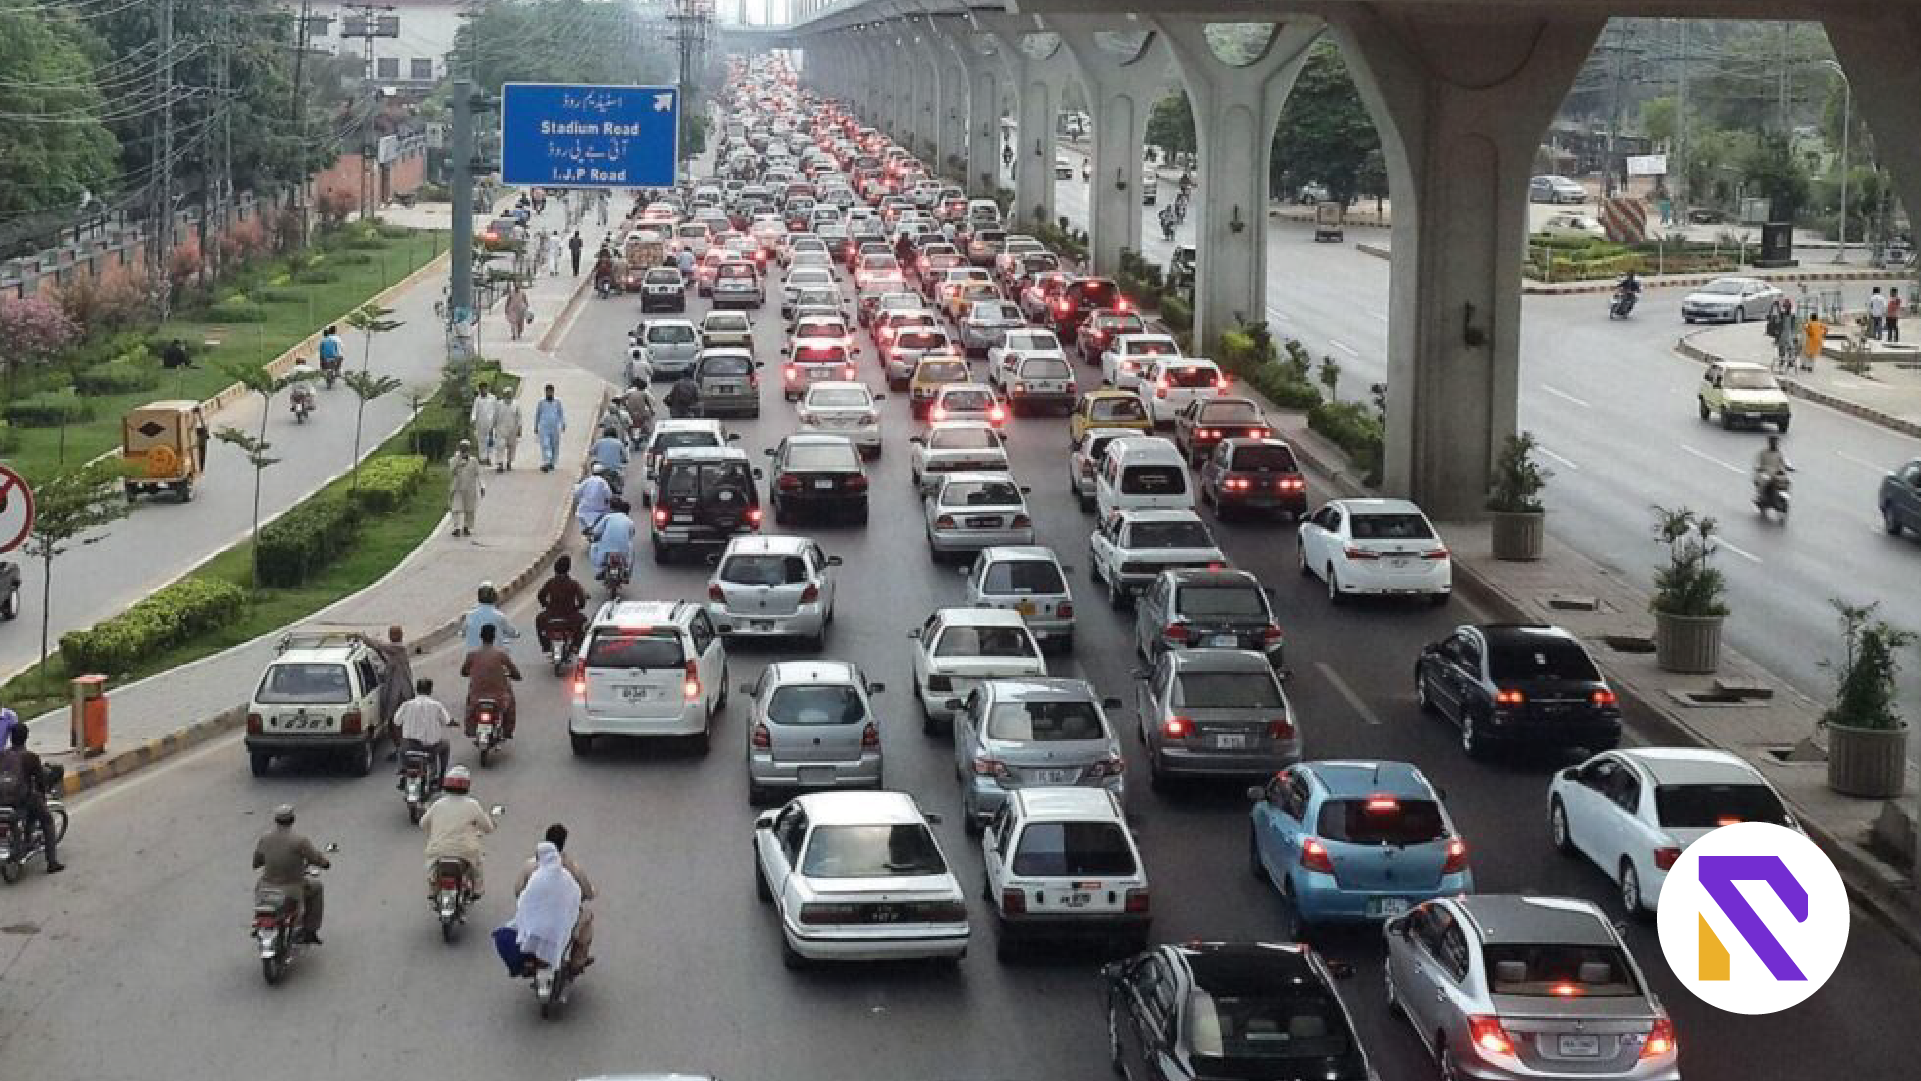 RMC to conduct traffic survey for Rawalpindi Master Plan | Realtorspk.com news